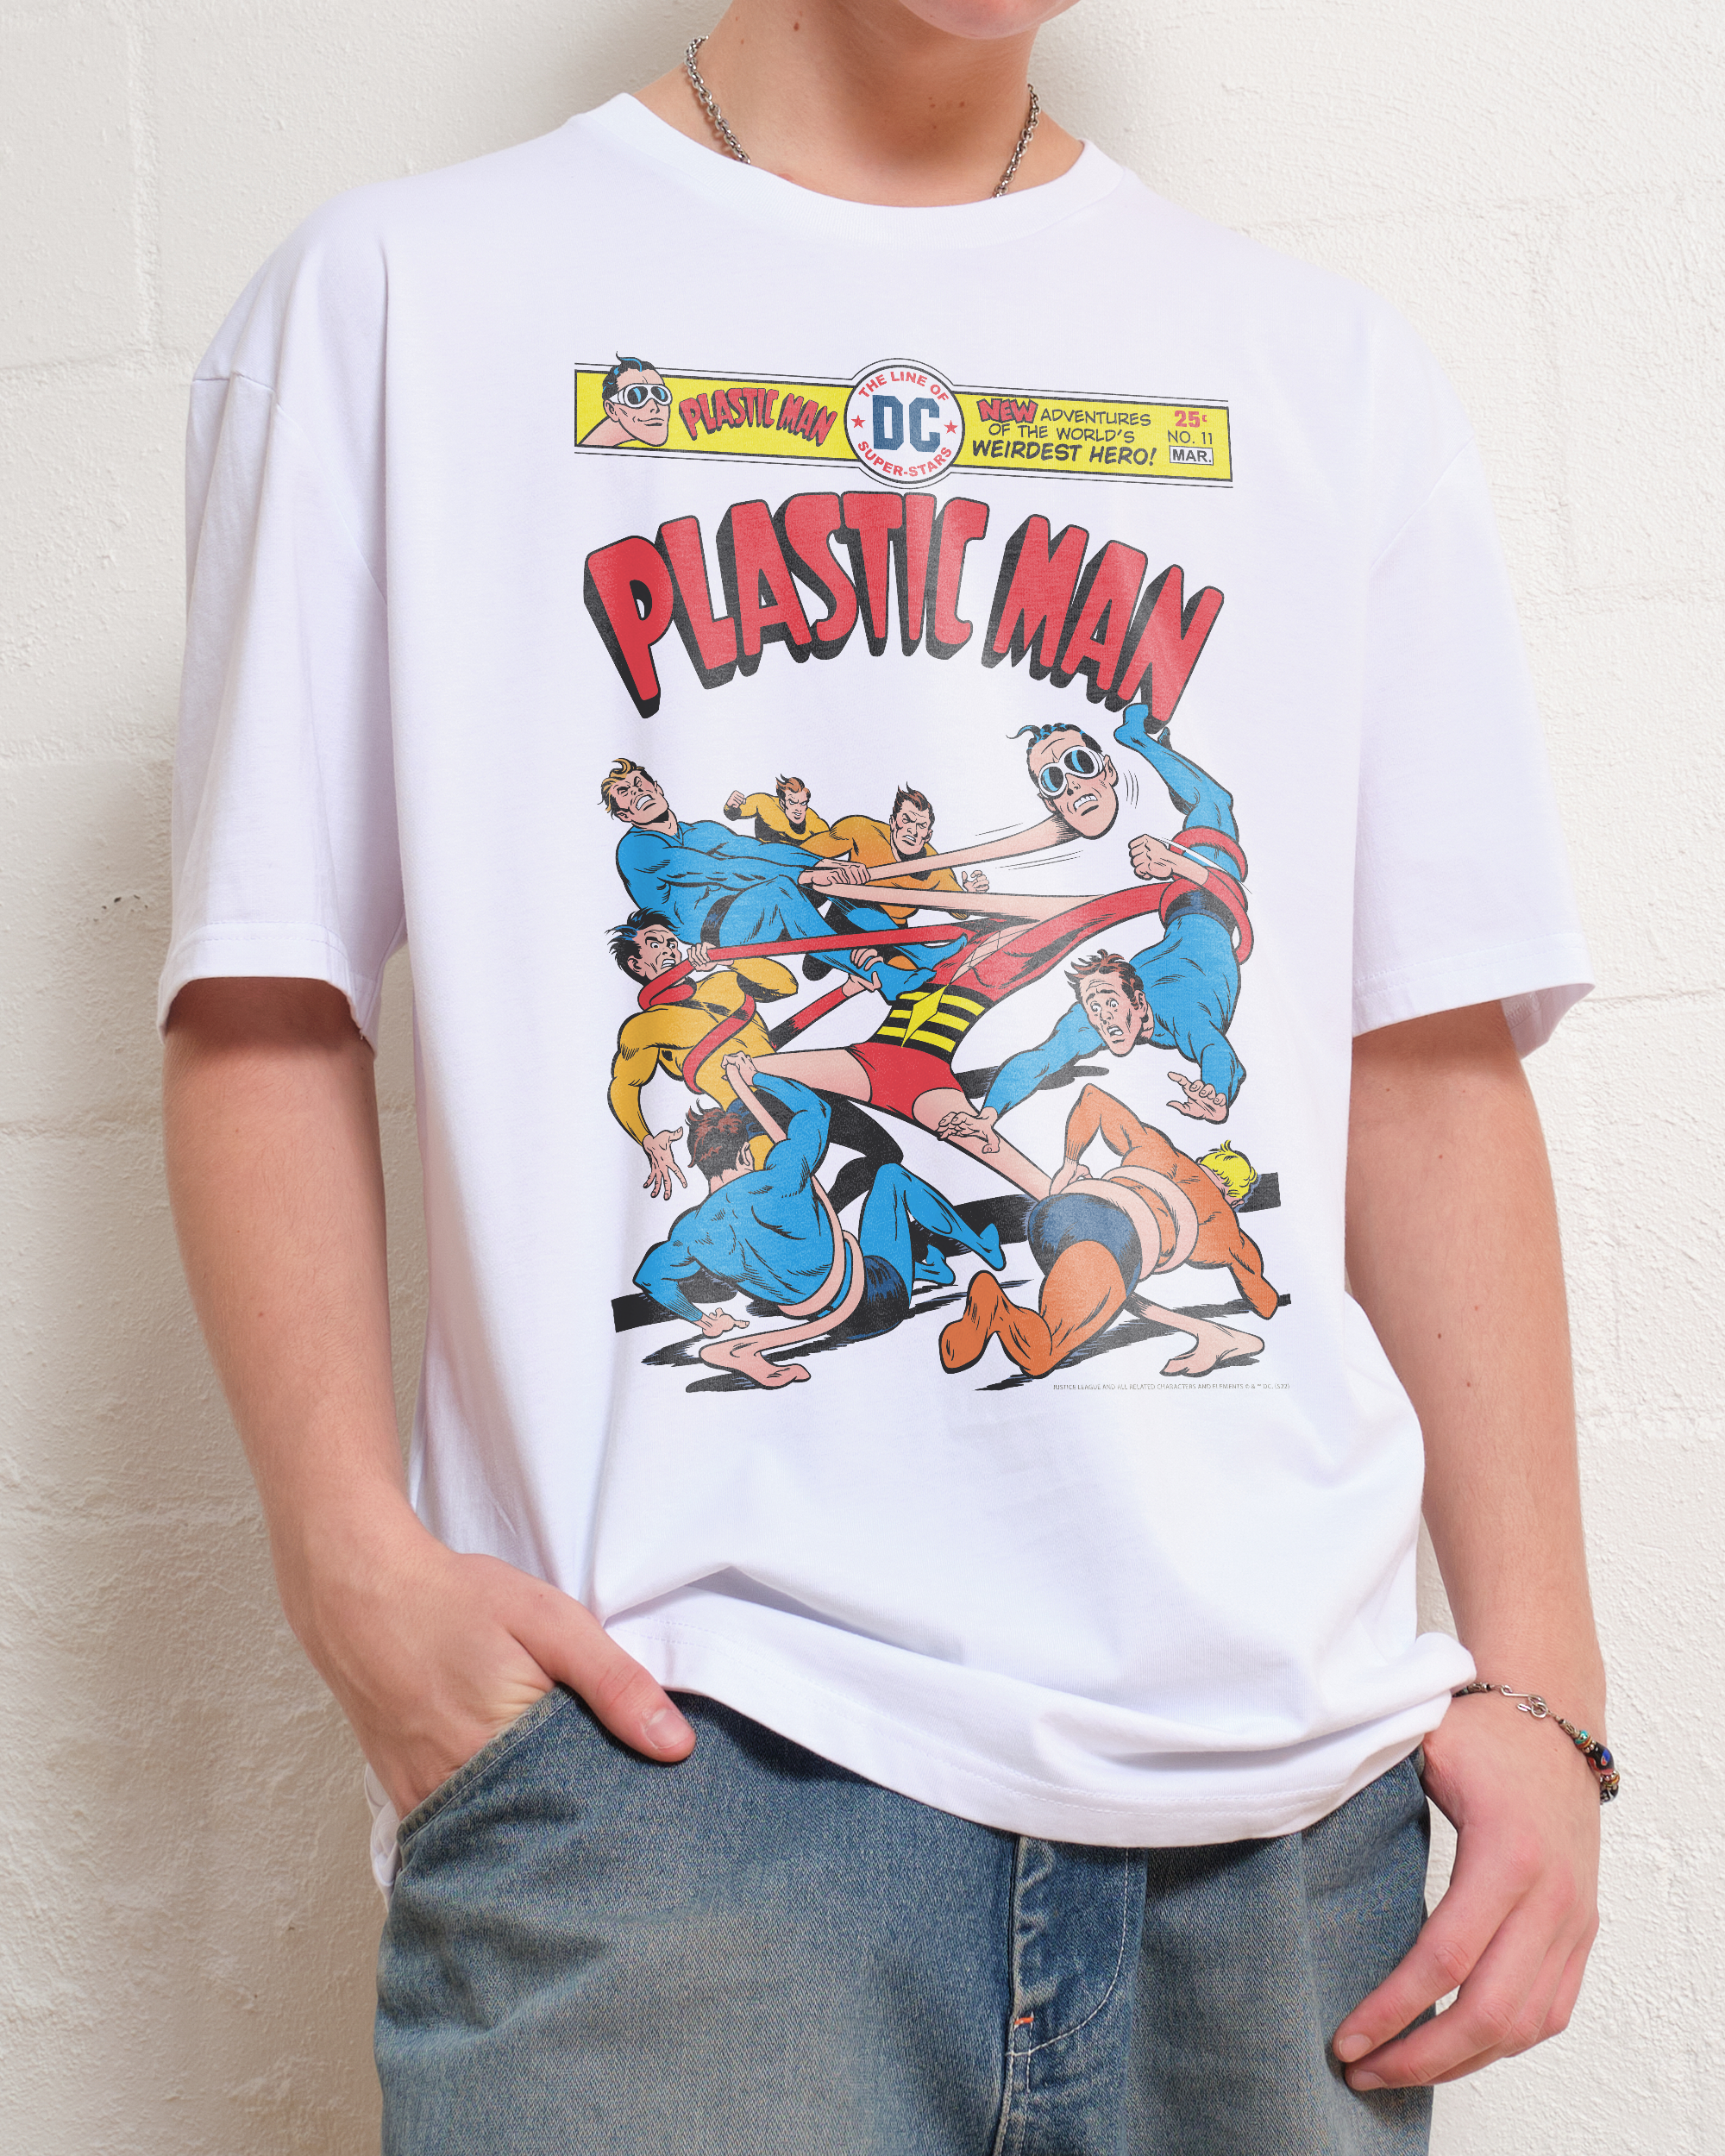 Plastic Man T-Shirt